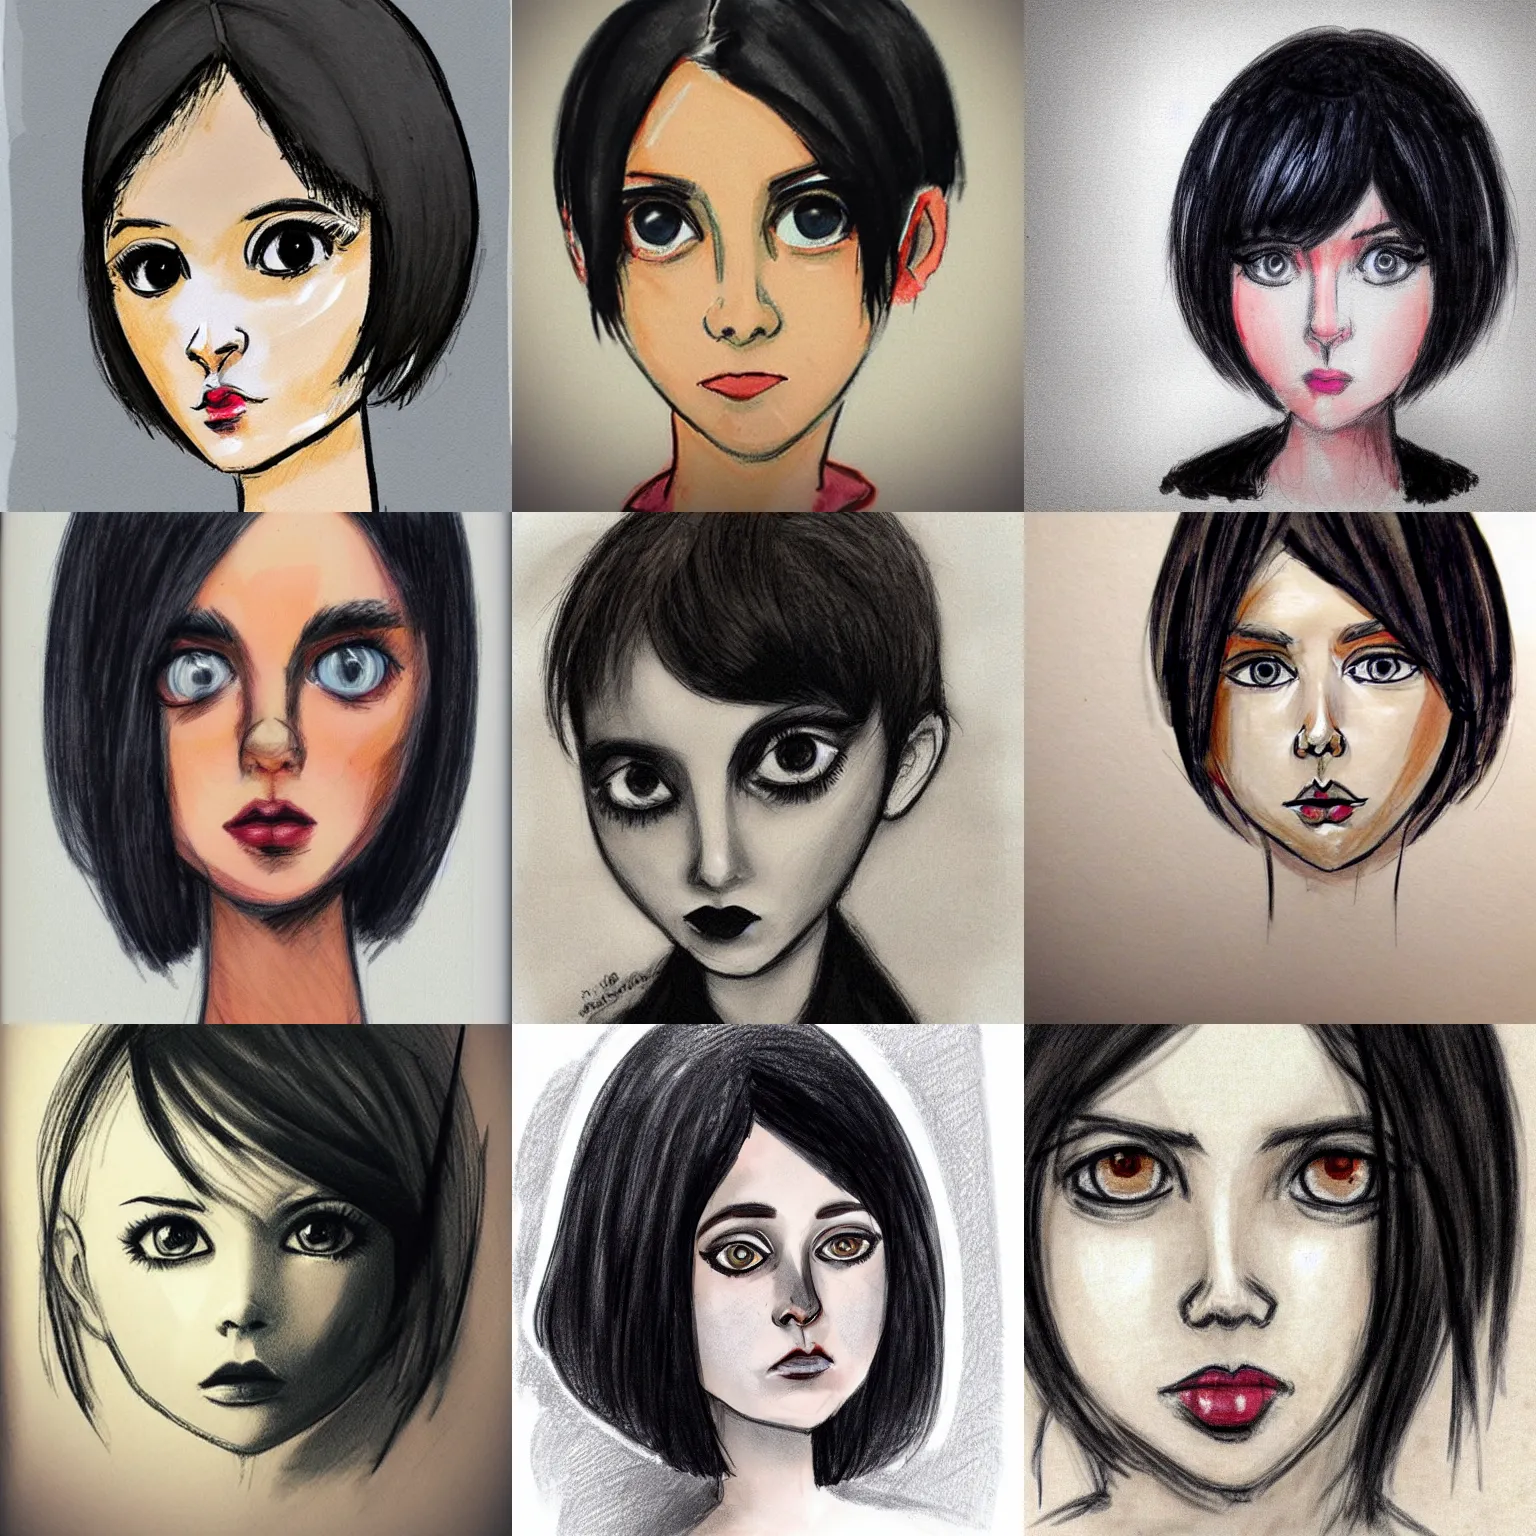 Prompt: sketch girl face, short black hair, big eyes